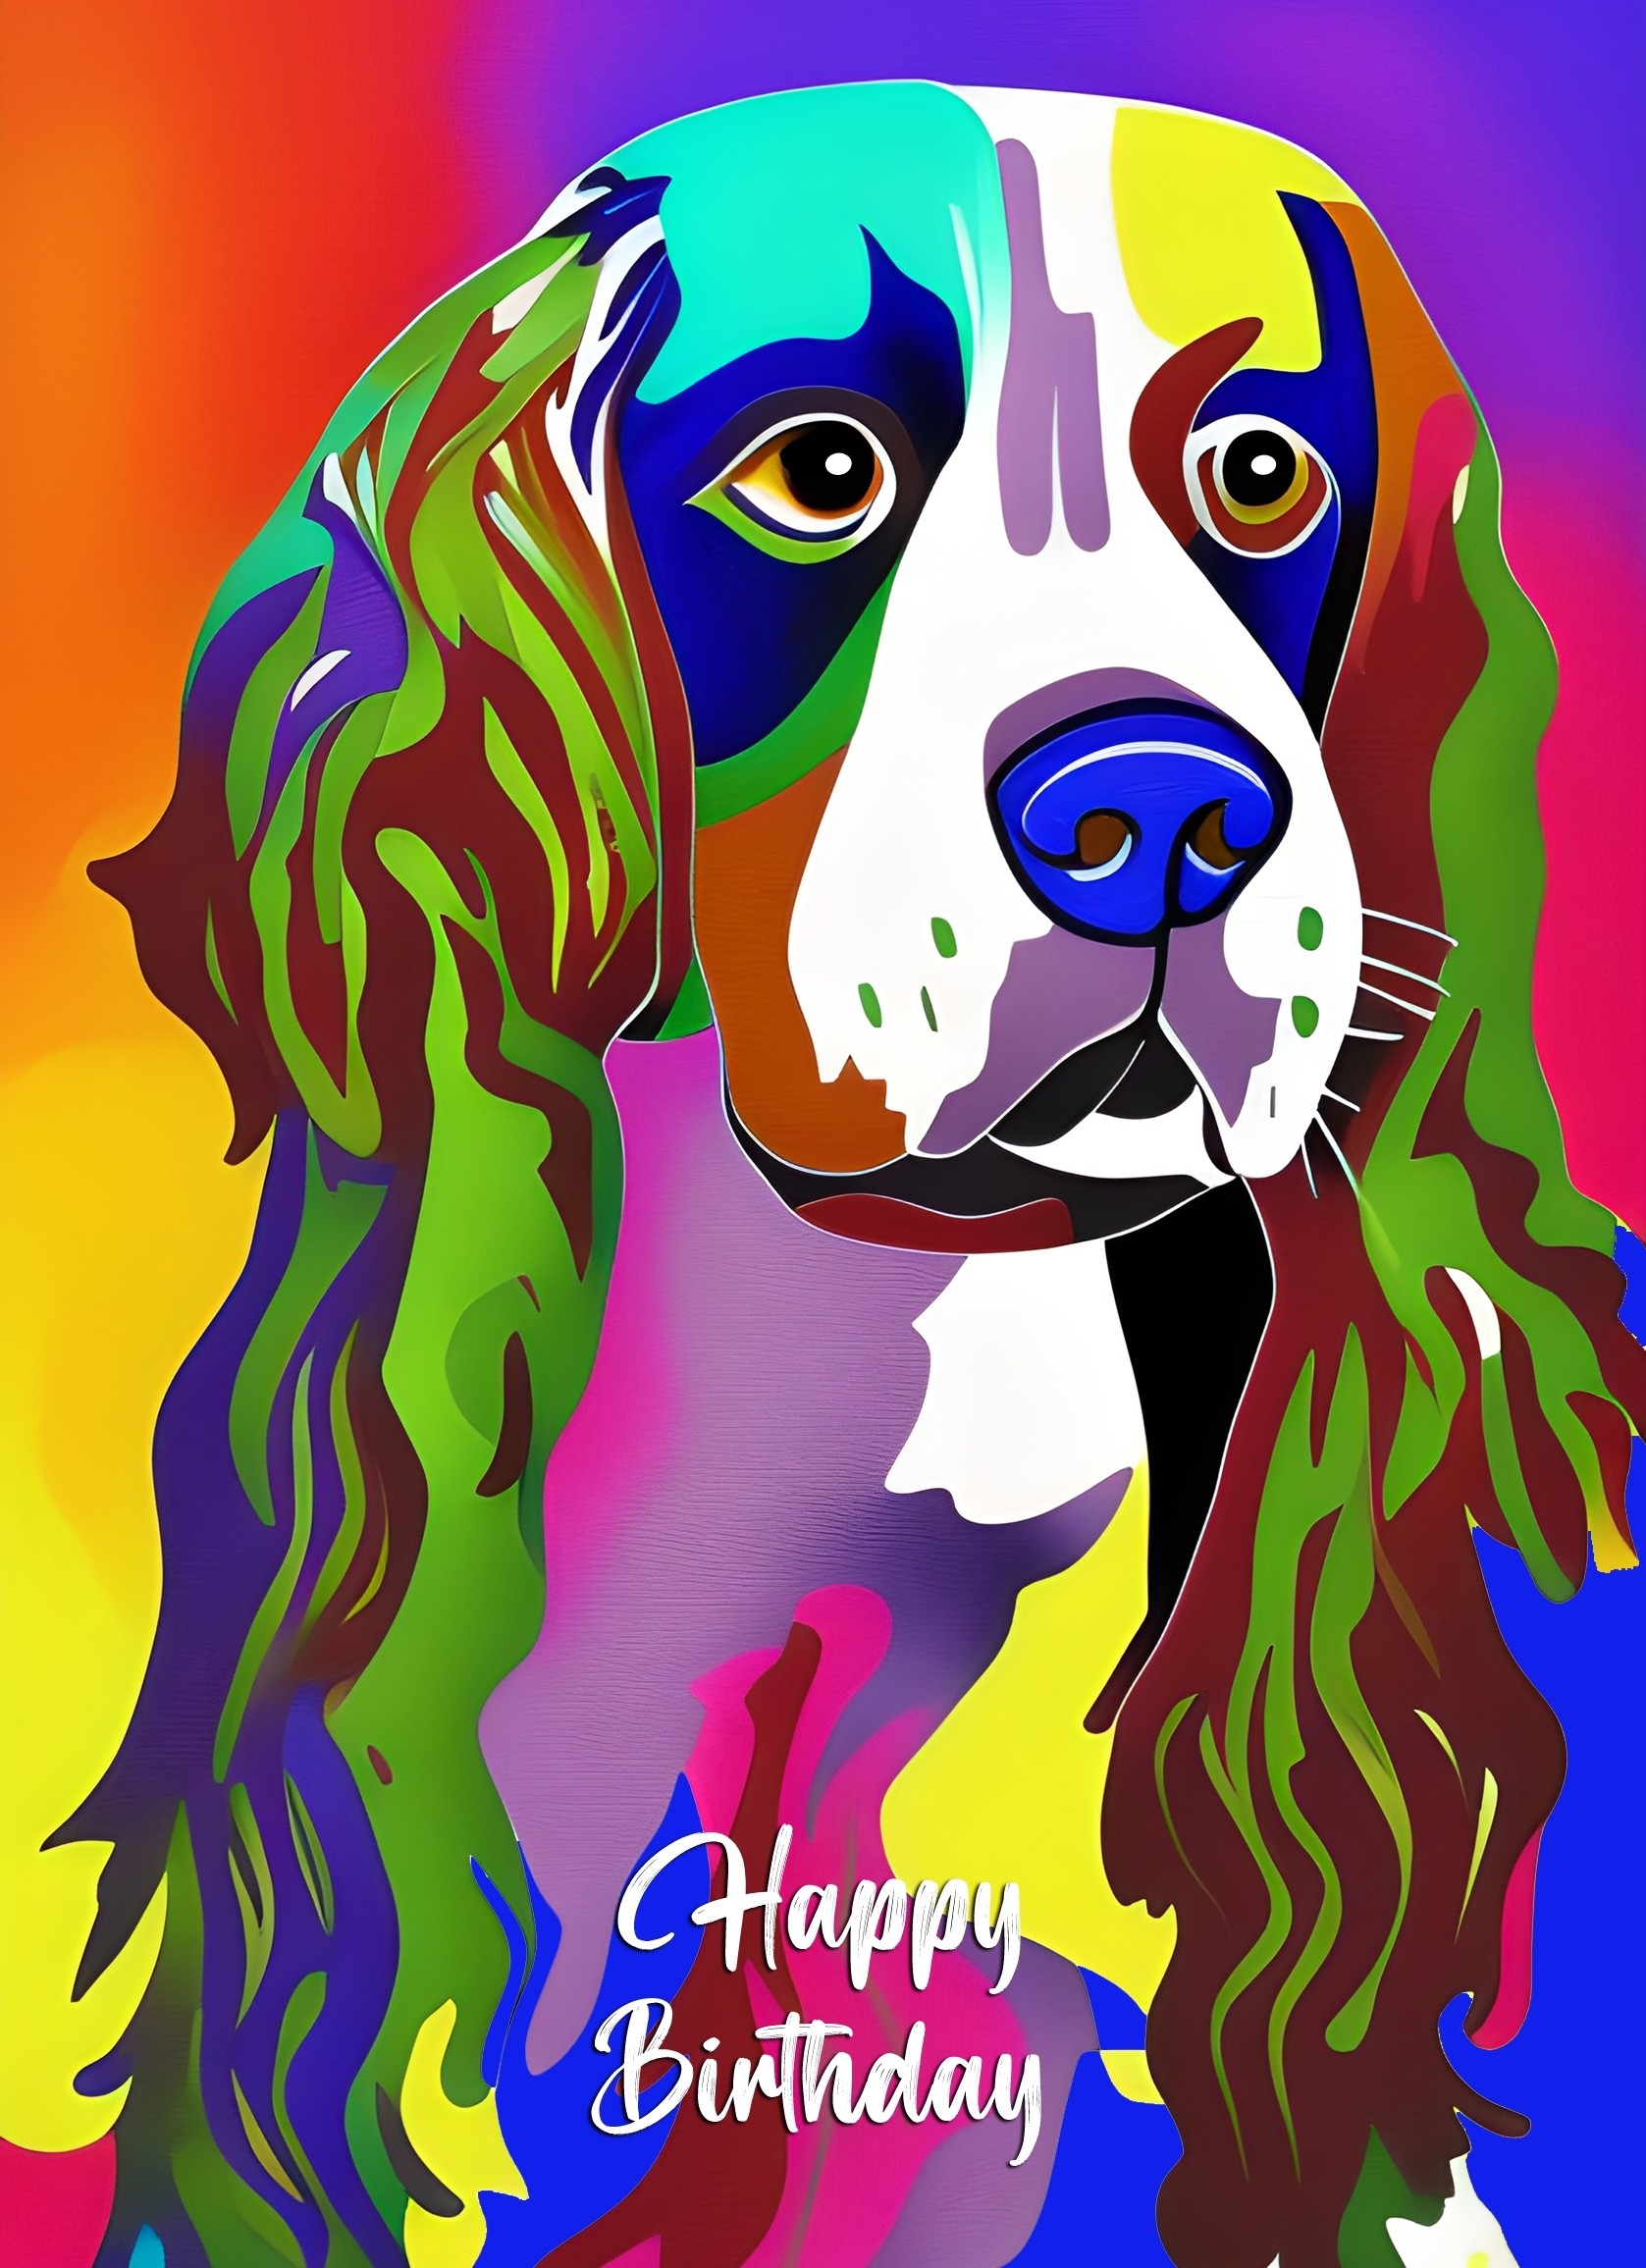 Springer Spaniel Dog Colourful Abstract Art Birthday Card